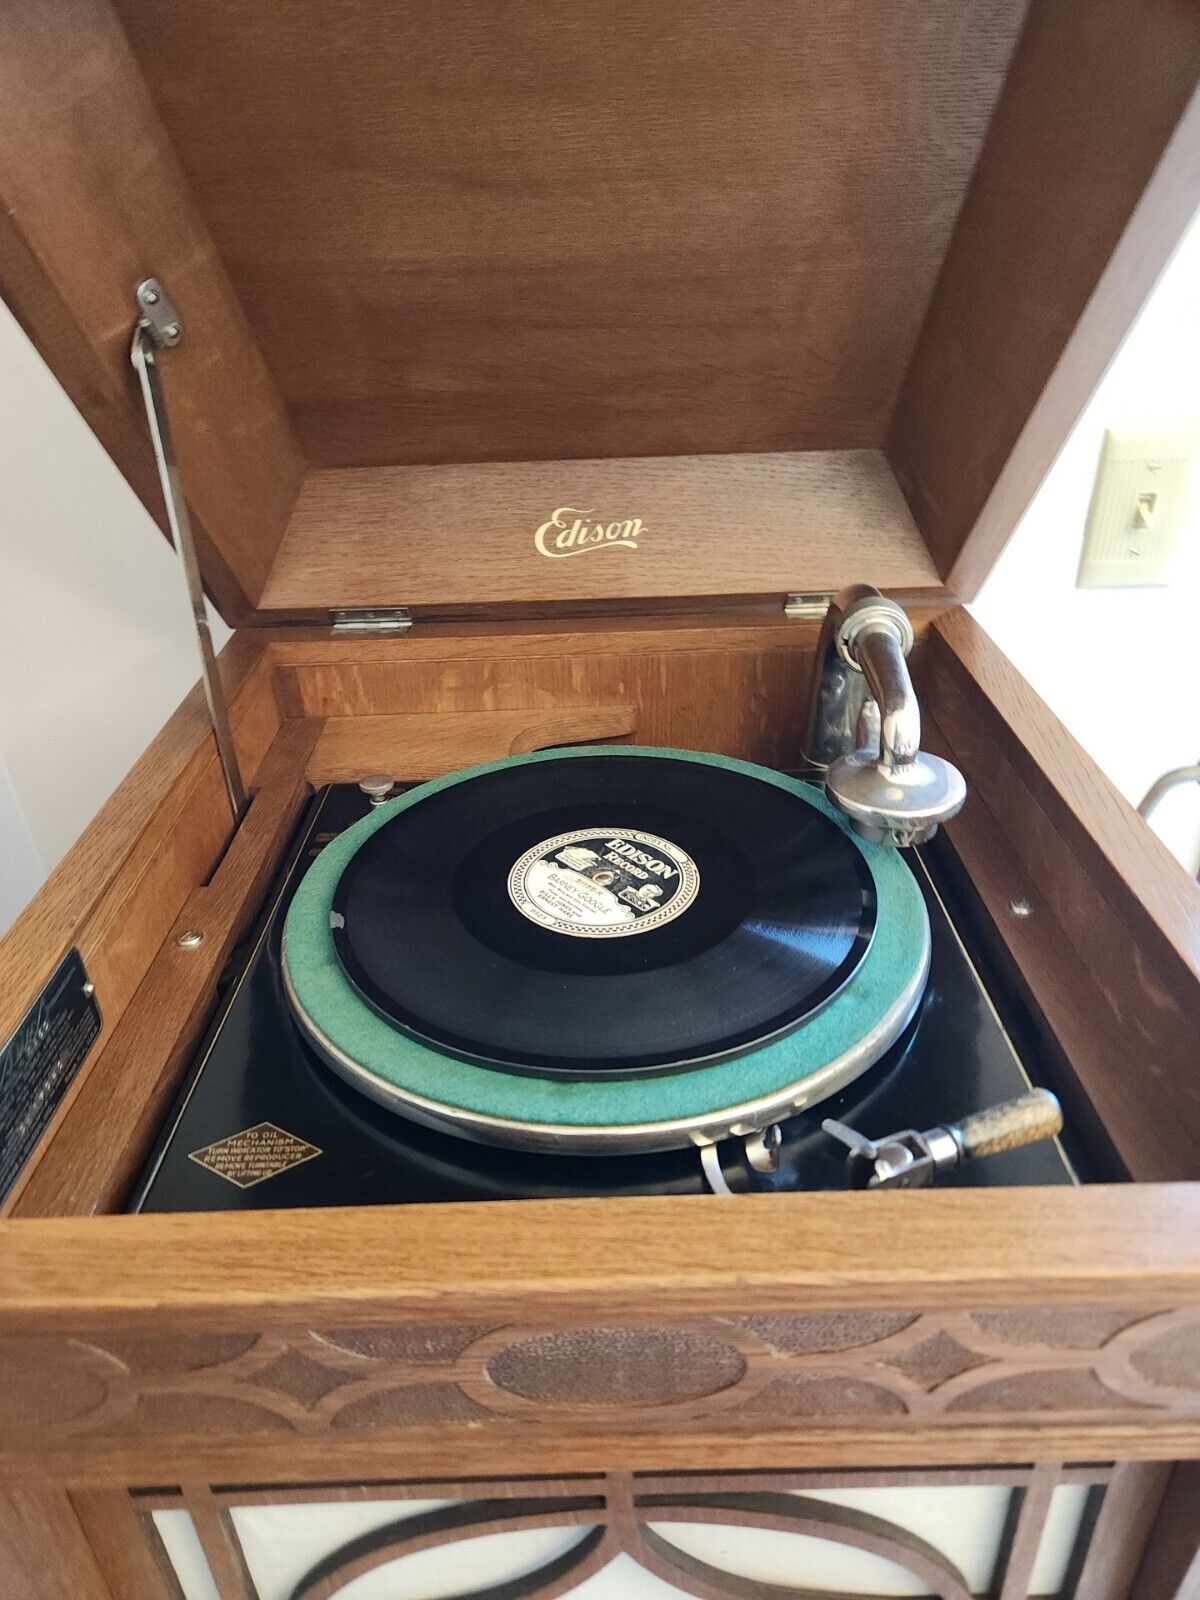 Edison Disc Phonograph, Model C150, SM 17040, Oak Case, Floor Model. Works.